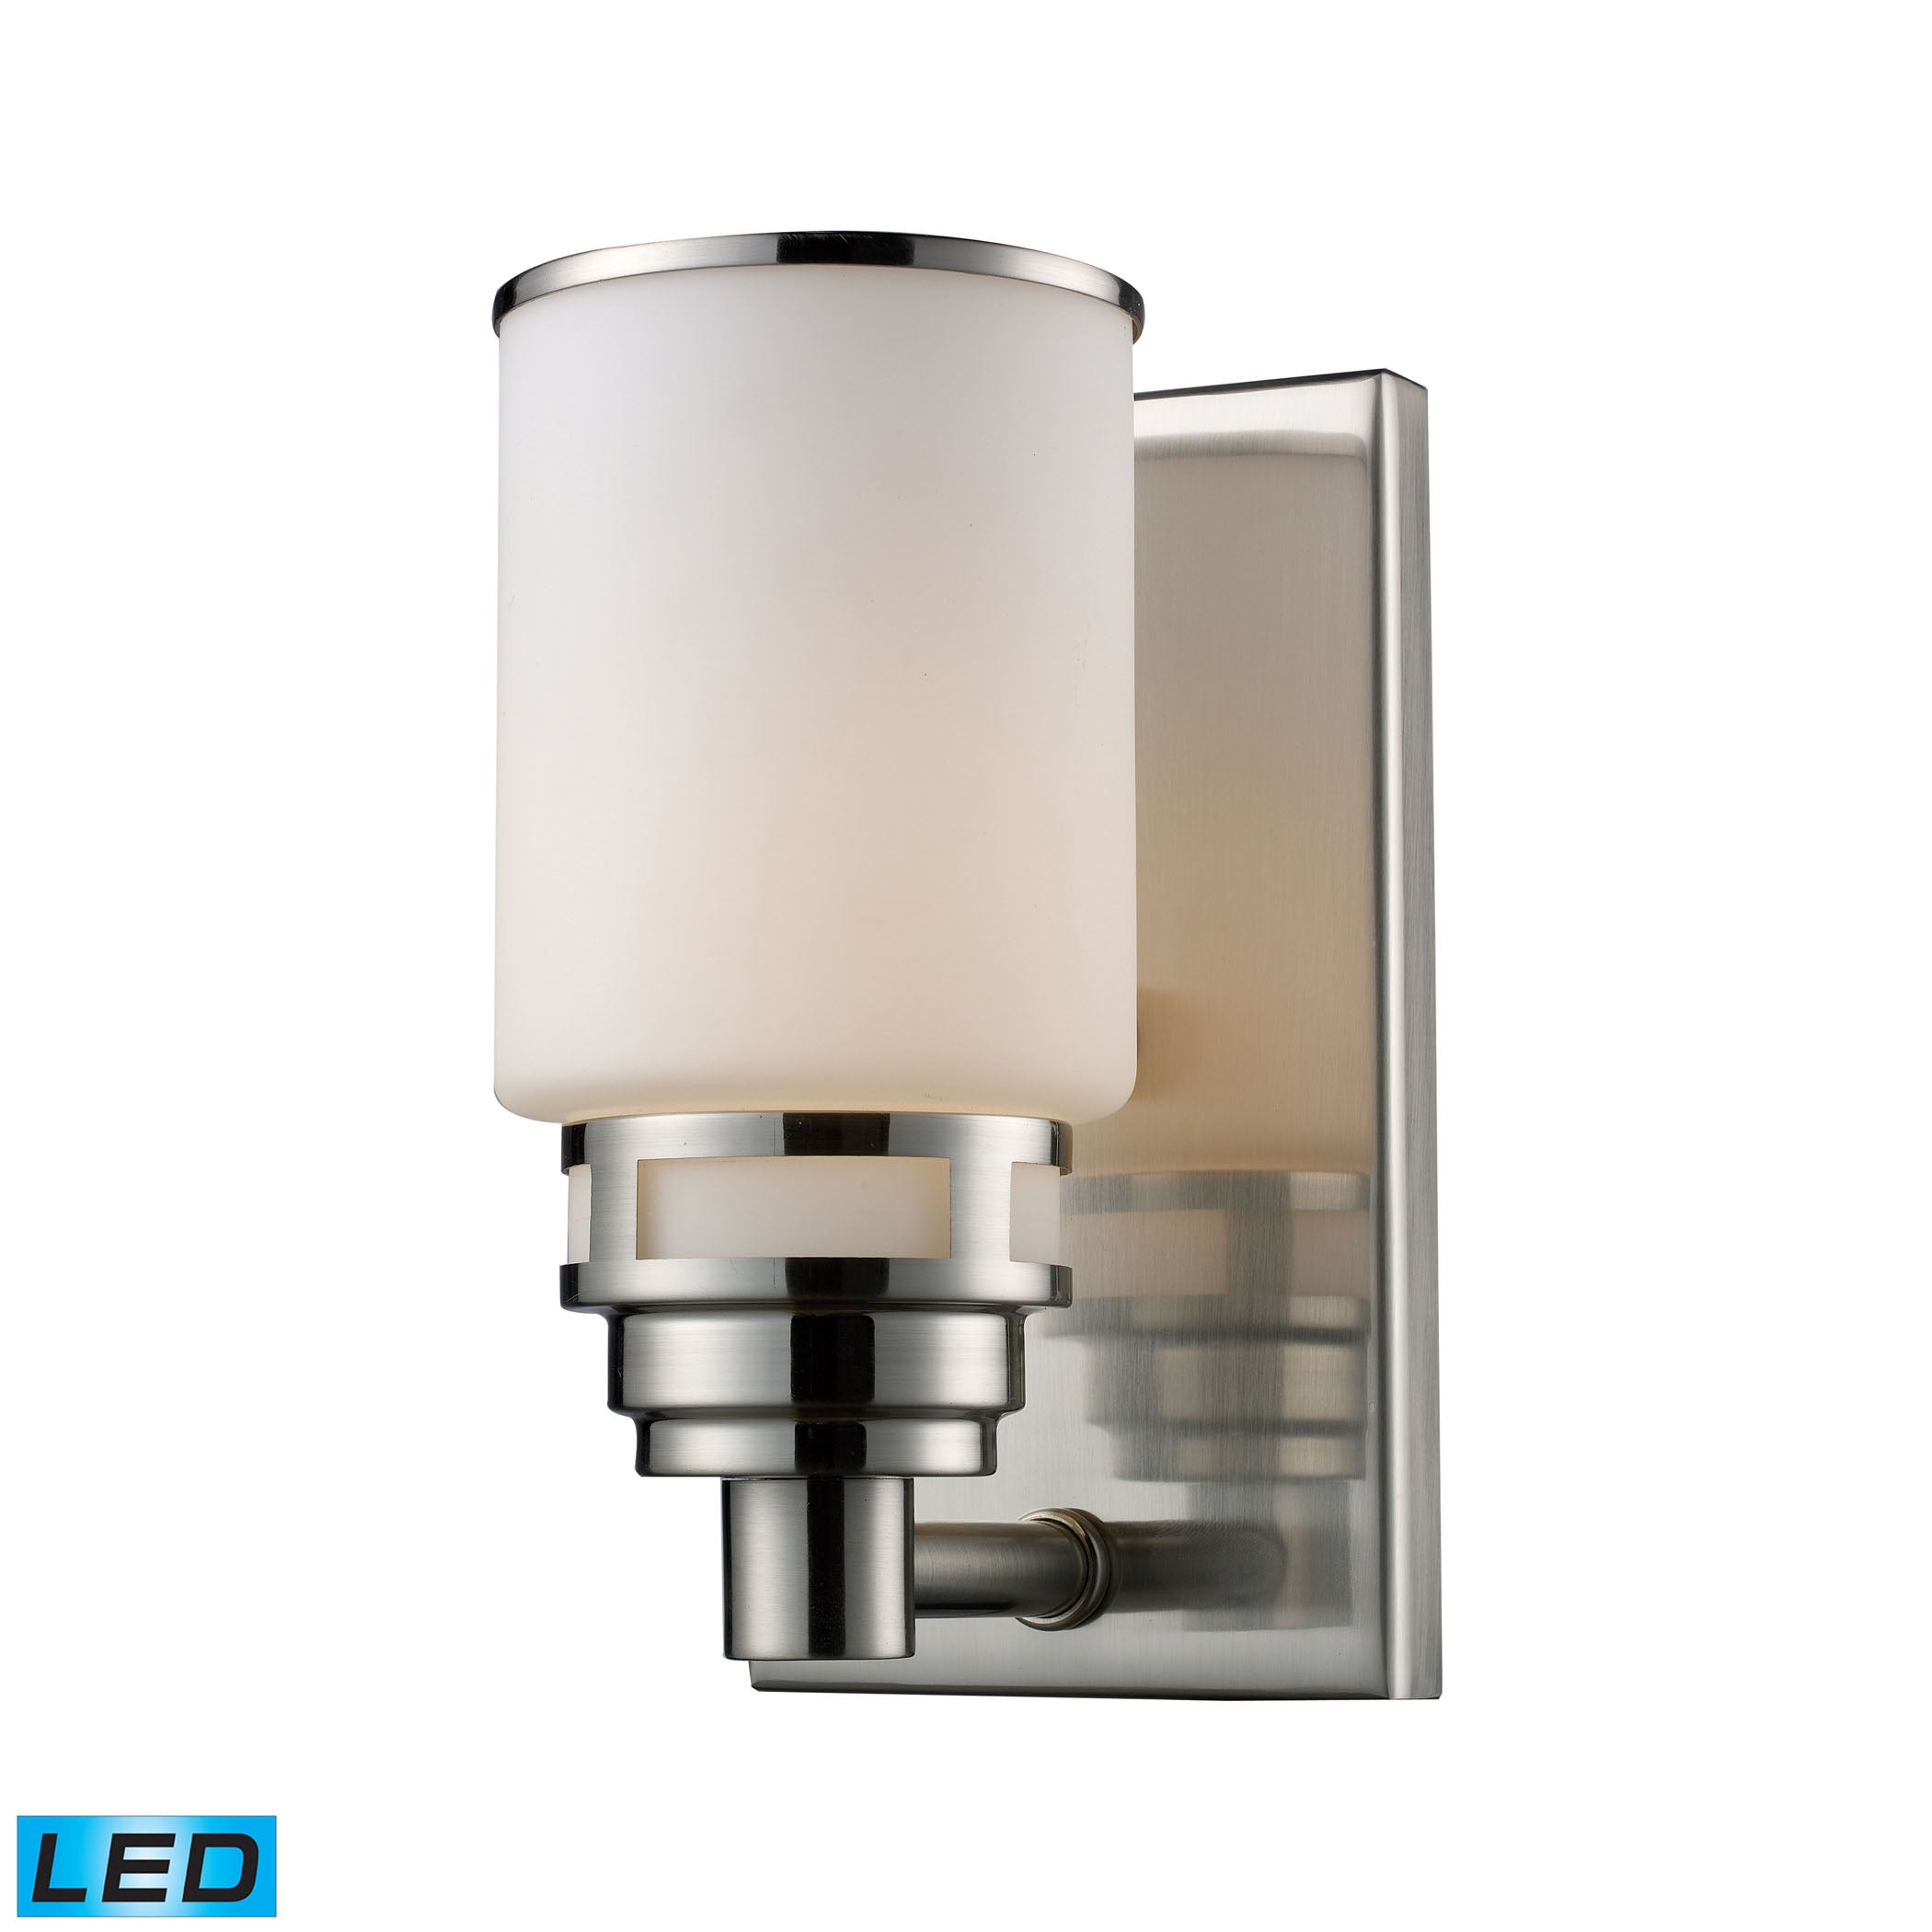 ELK Lighting 11264/1-LED Bryant 1-Light Vanity Lamp in Satin Nickel with Opal White Glass - Includes LED Bulb